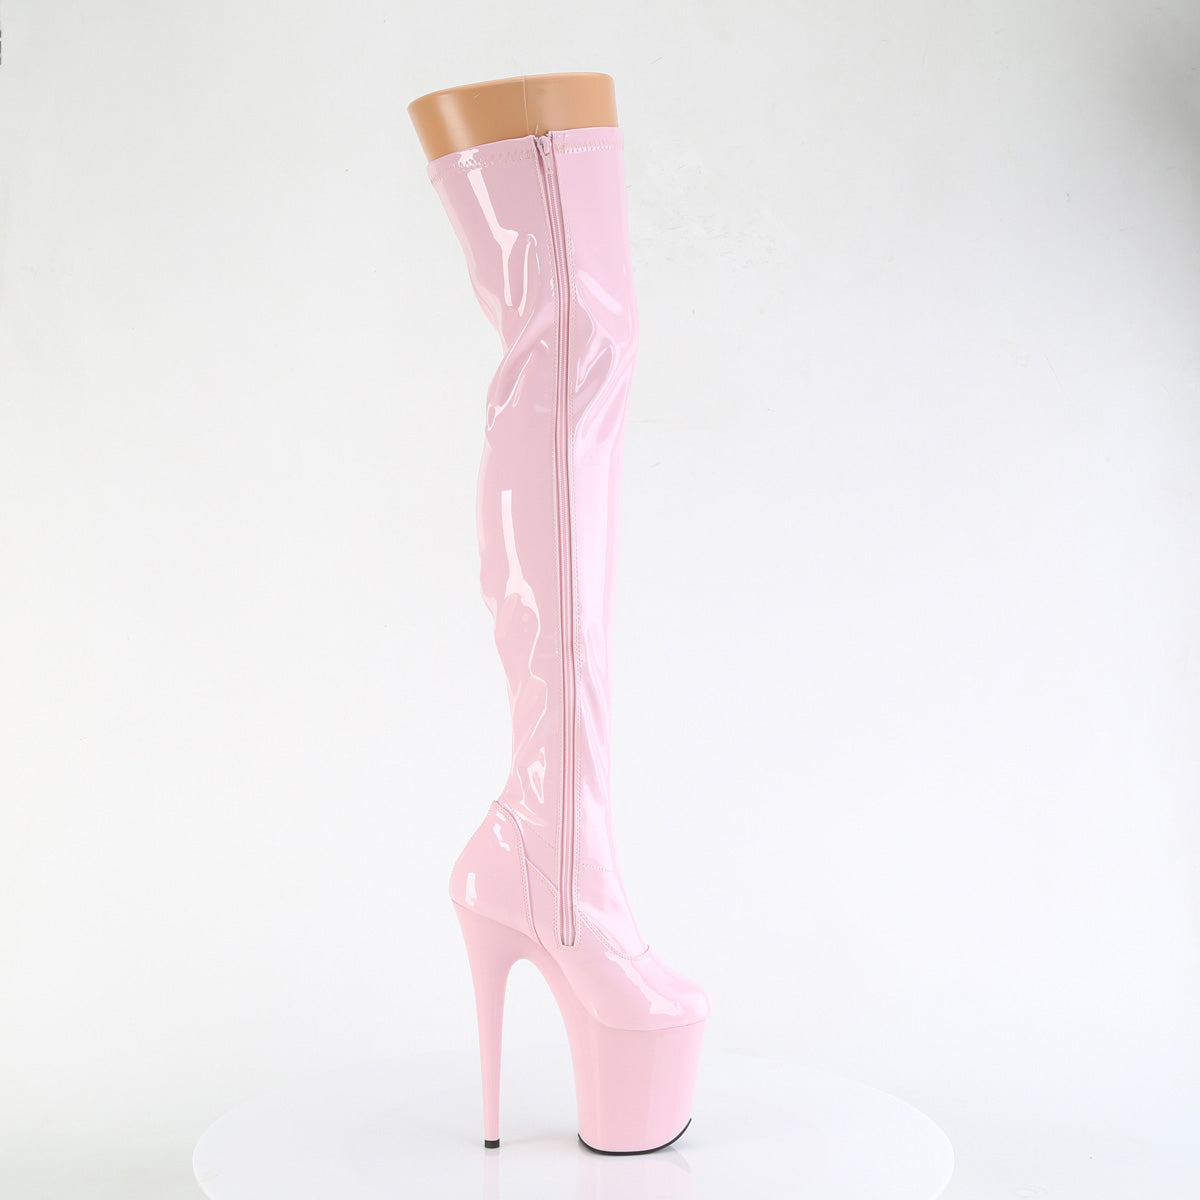 8 Inch Heel FLAMINGO-3000 Baby Pink Patent